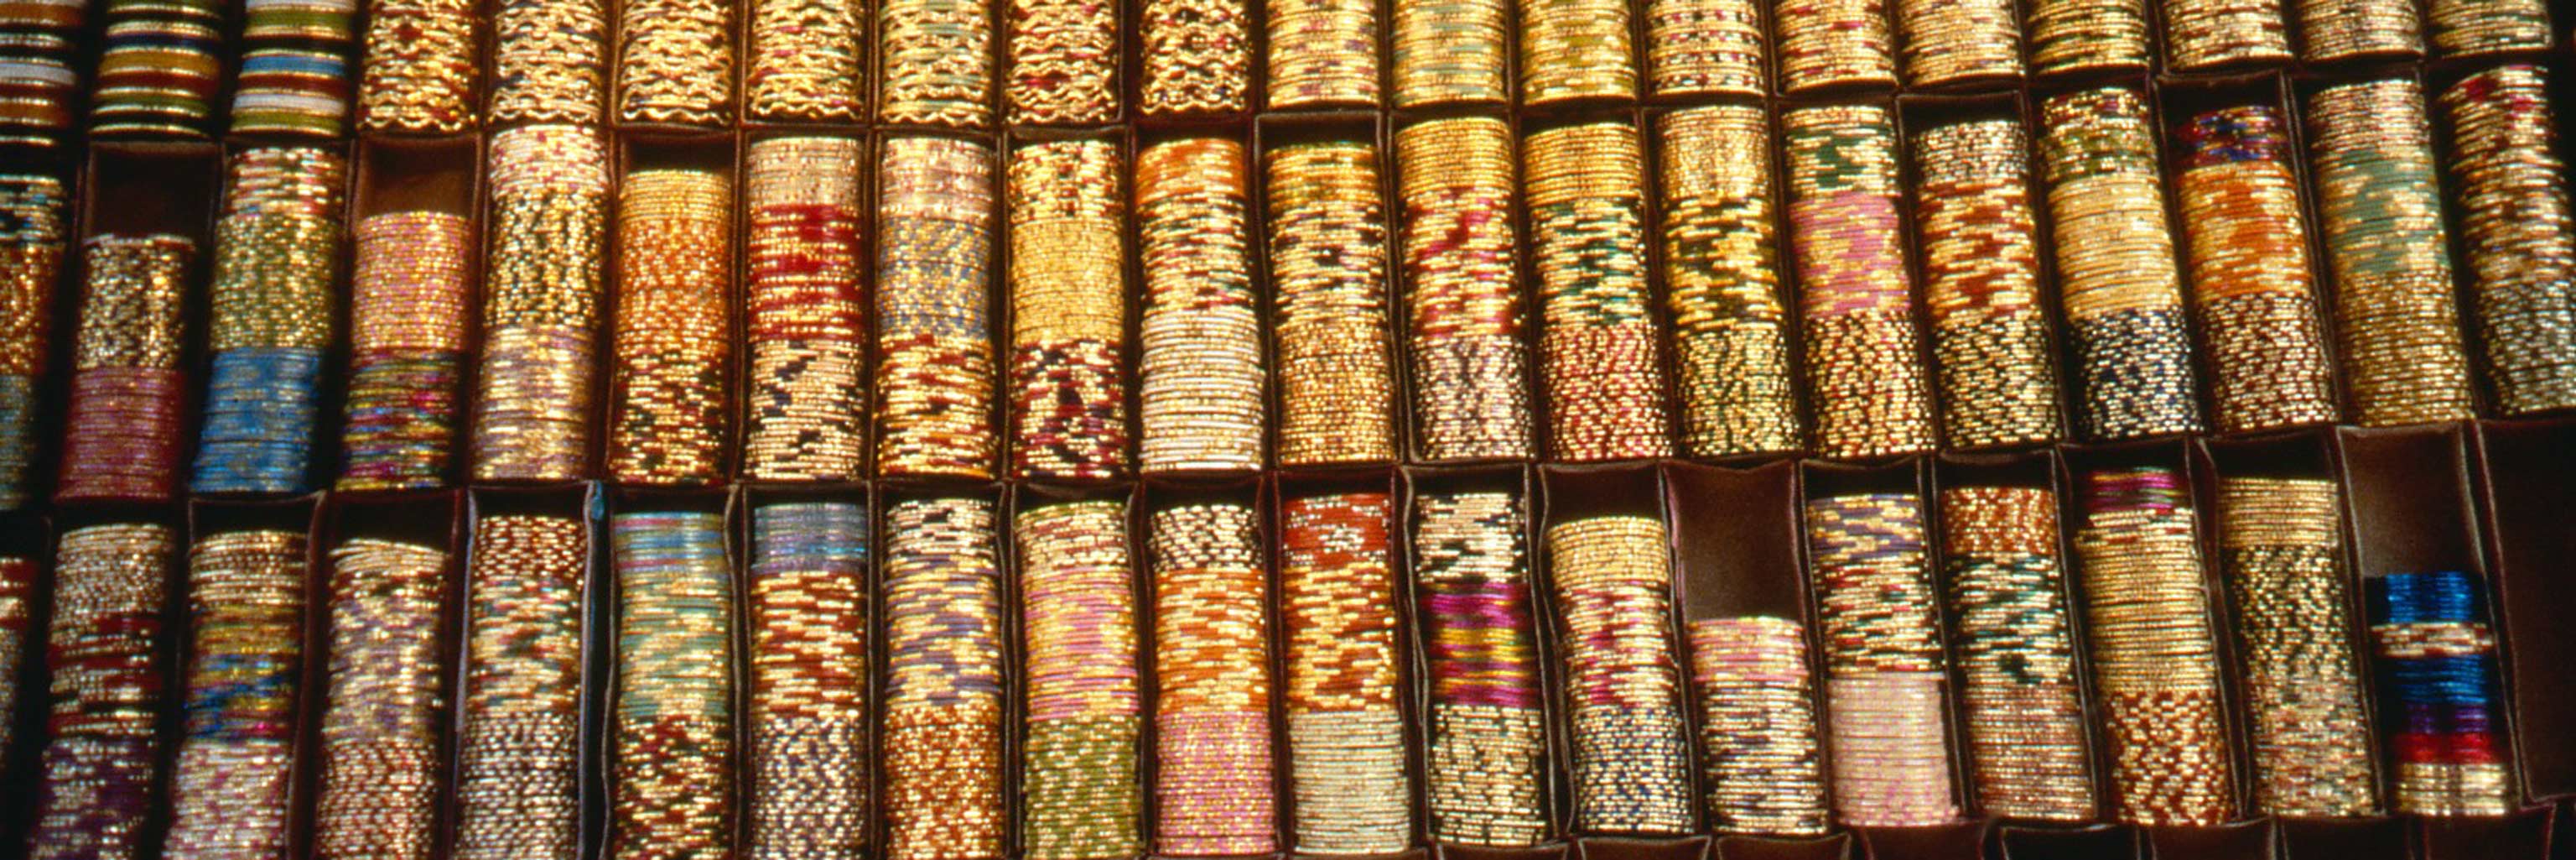 Bangle bracelets on display in India.